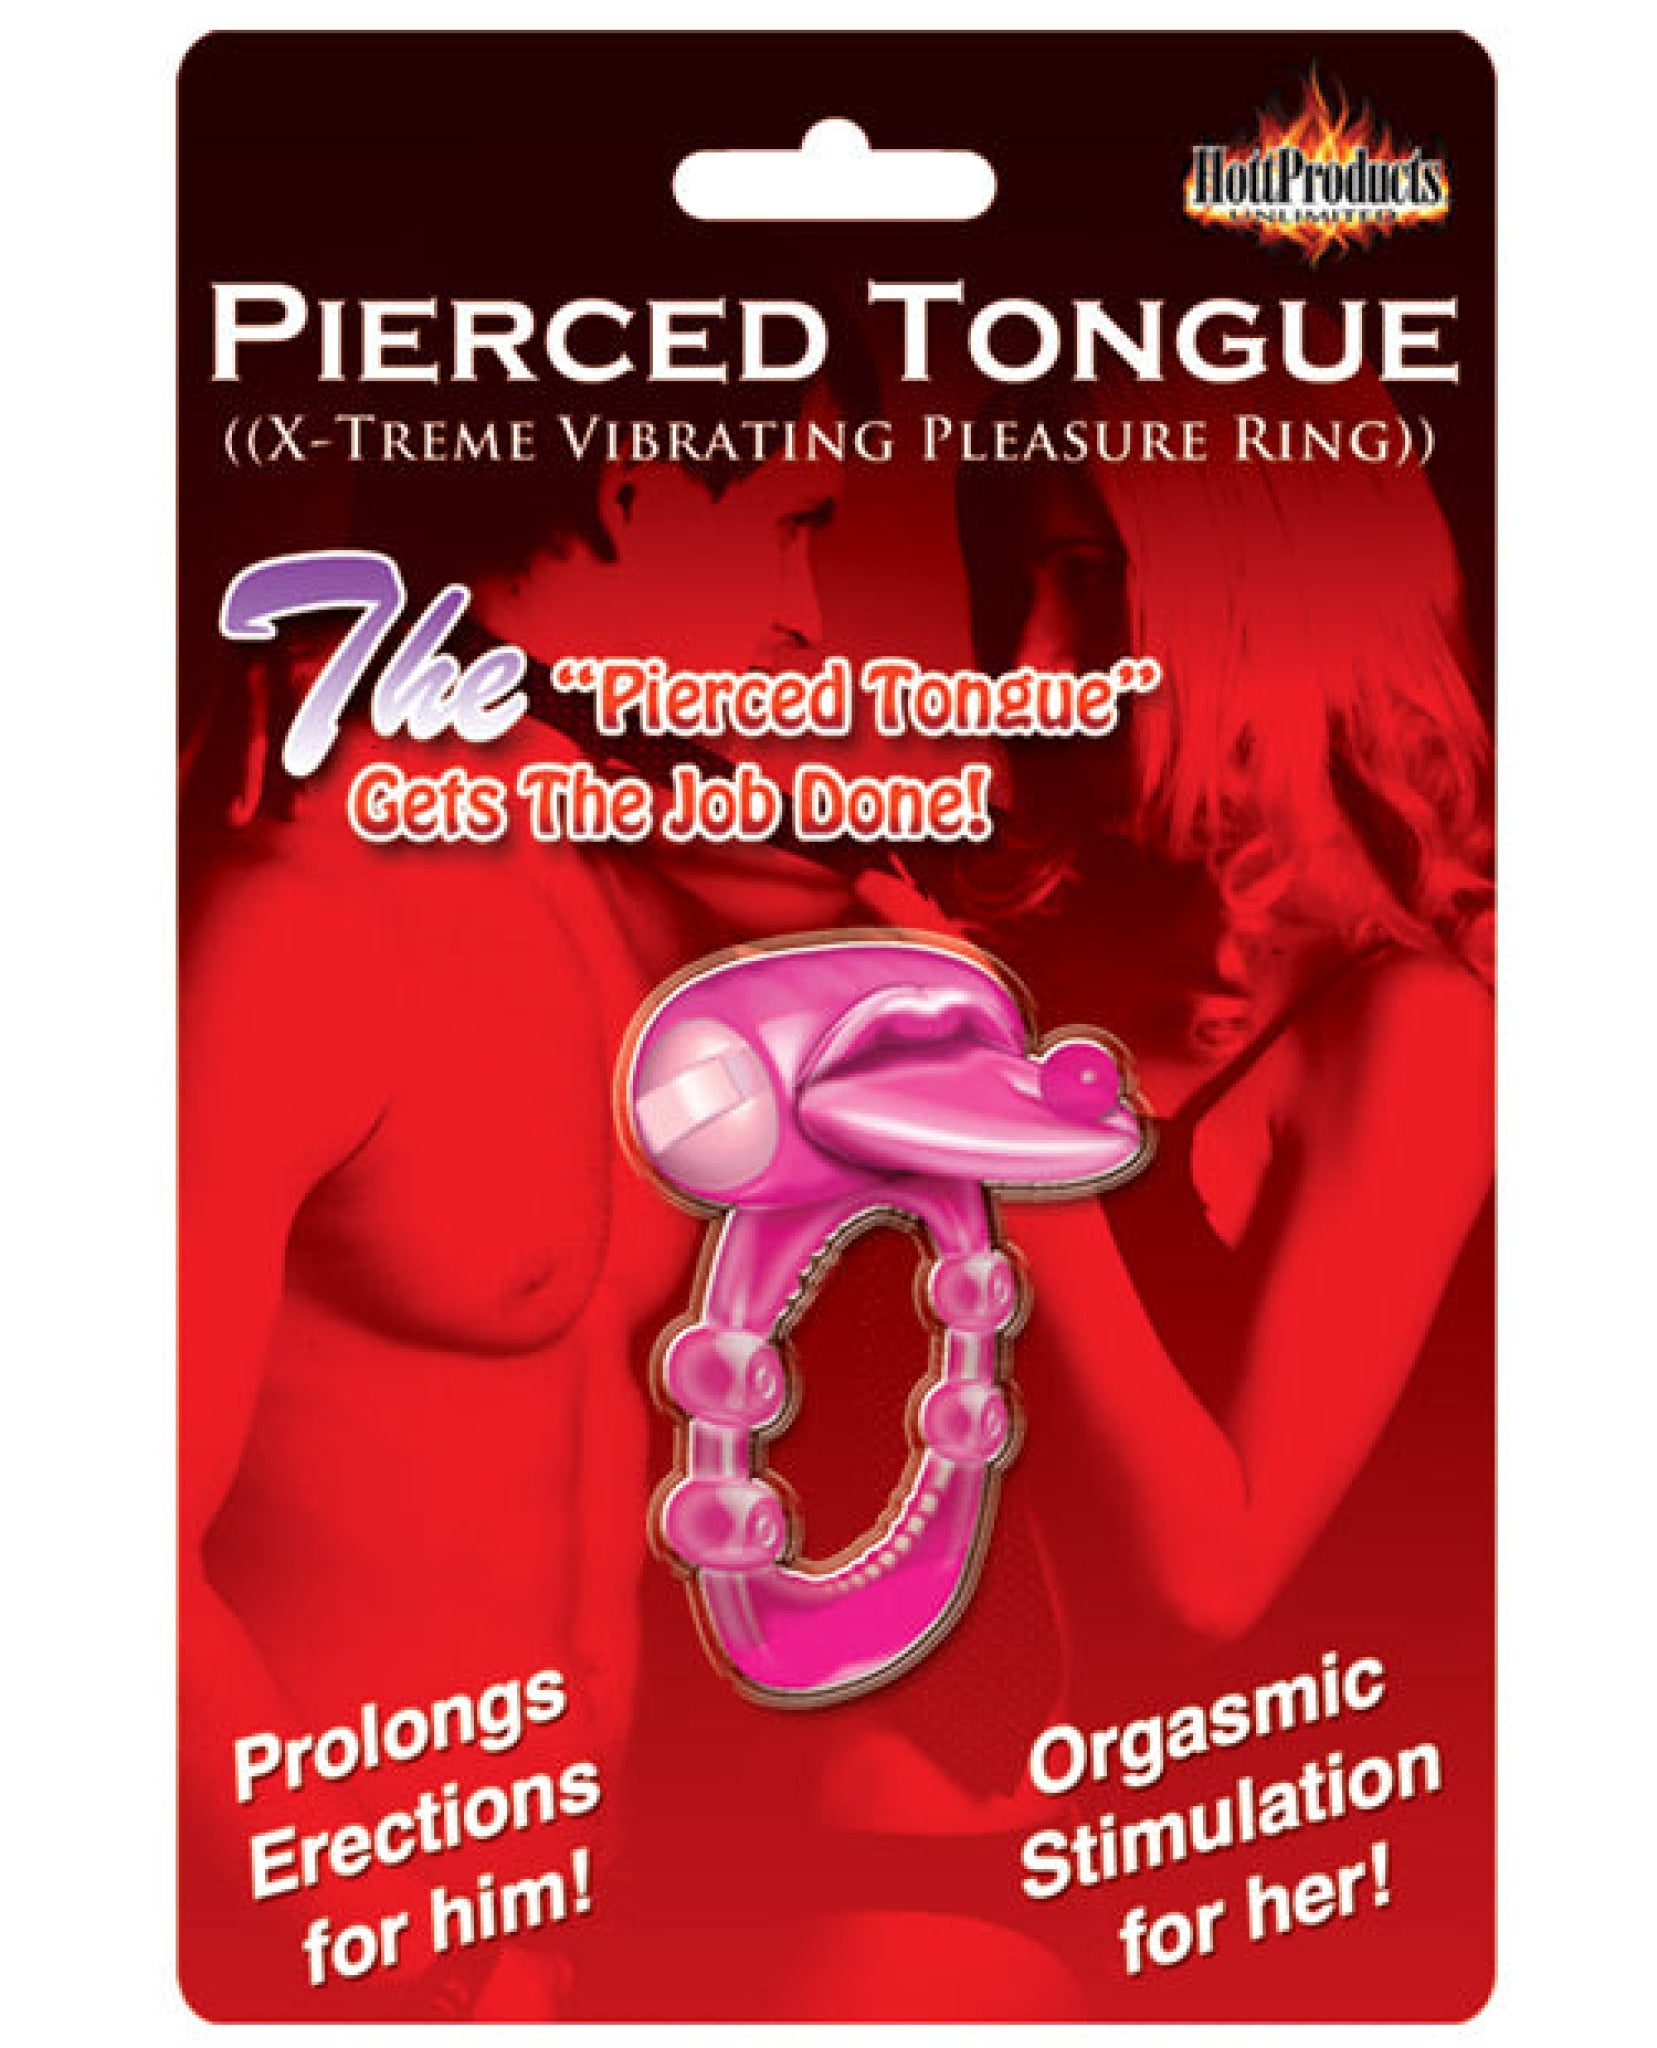 Pierced Tongue X-treme Vibrating Pleasure Ring Hott Products